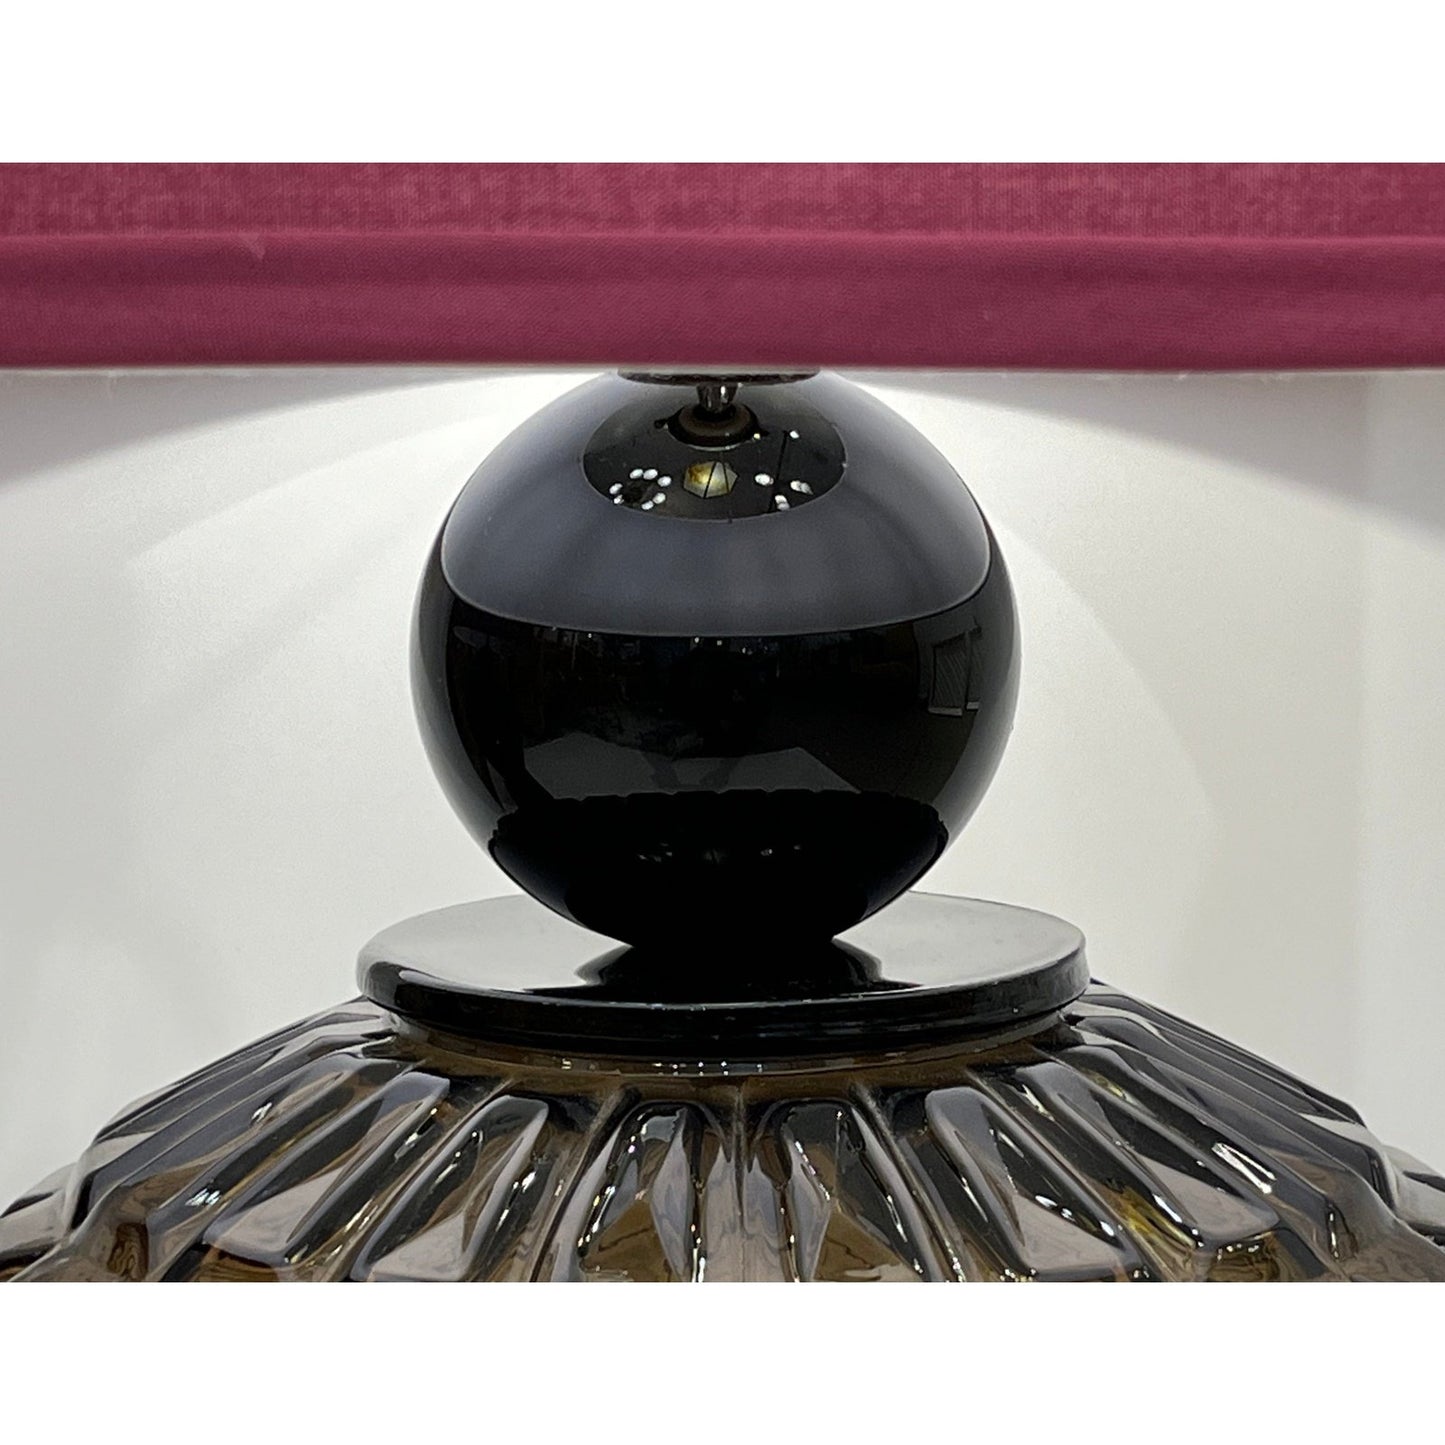 Vivarini 1970 Italian Vintage Pair of Black Smoked Murano Glass Plum Linen Lamps